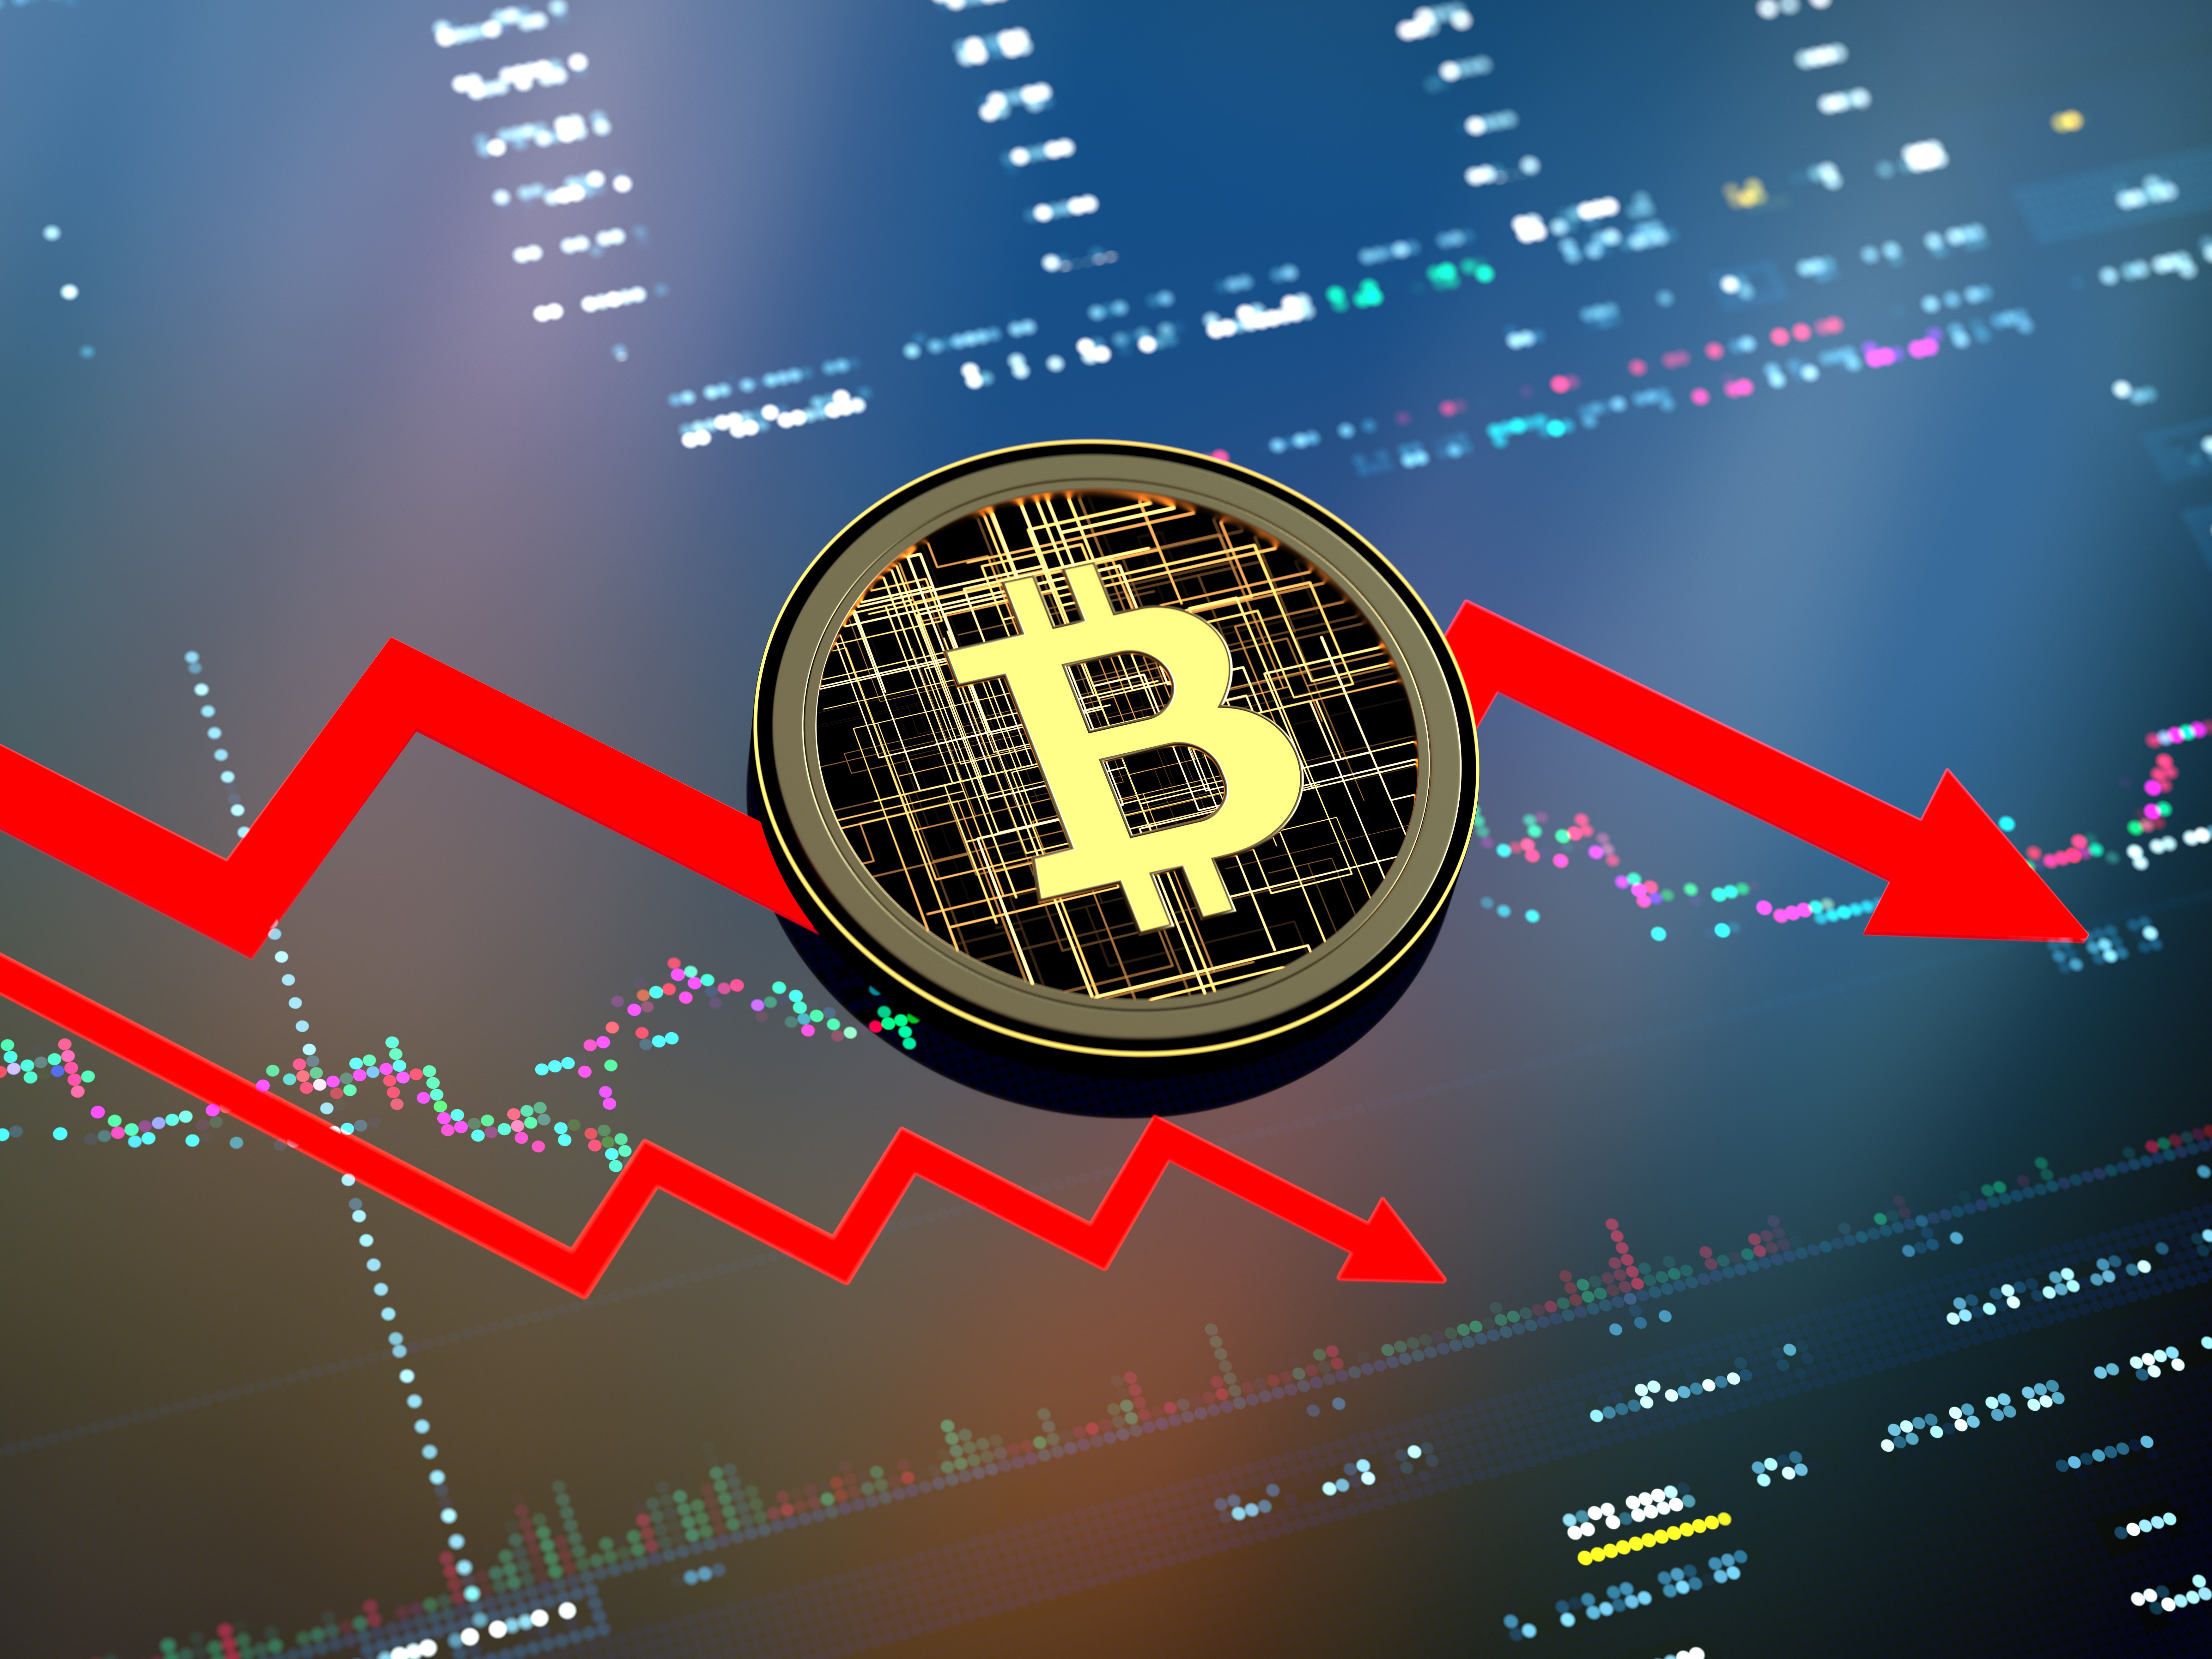 Bitcoin crashing now bovada illinois